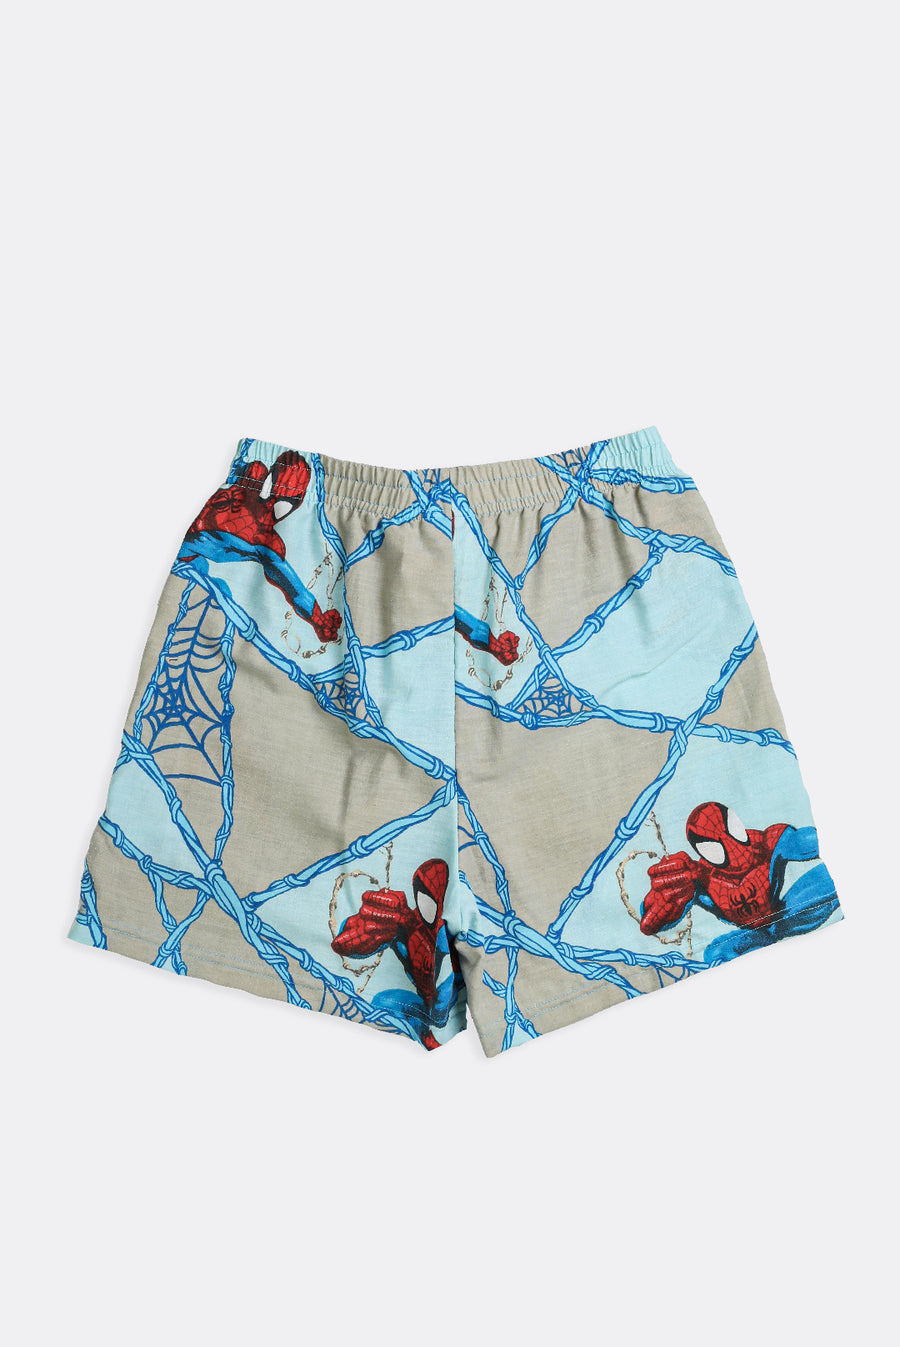 Unisex Rework Spiderman Boxer Shorts - S